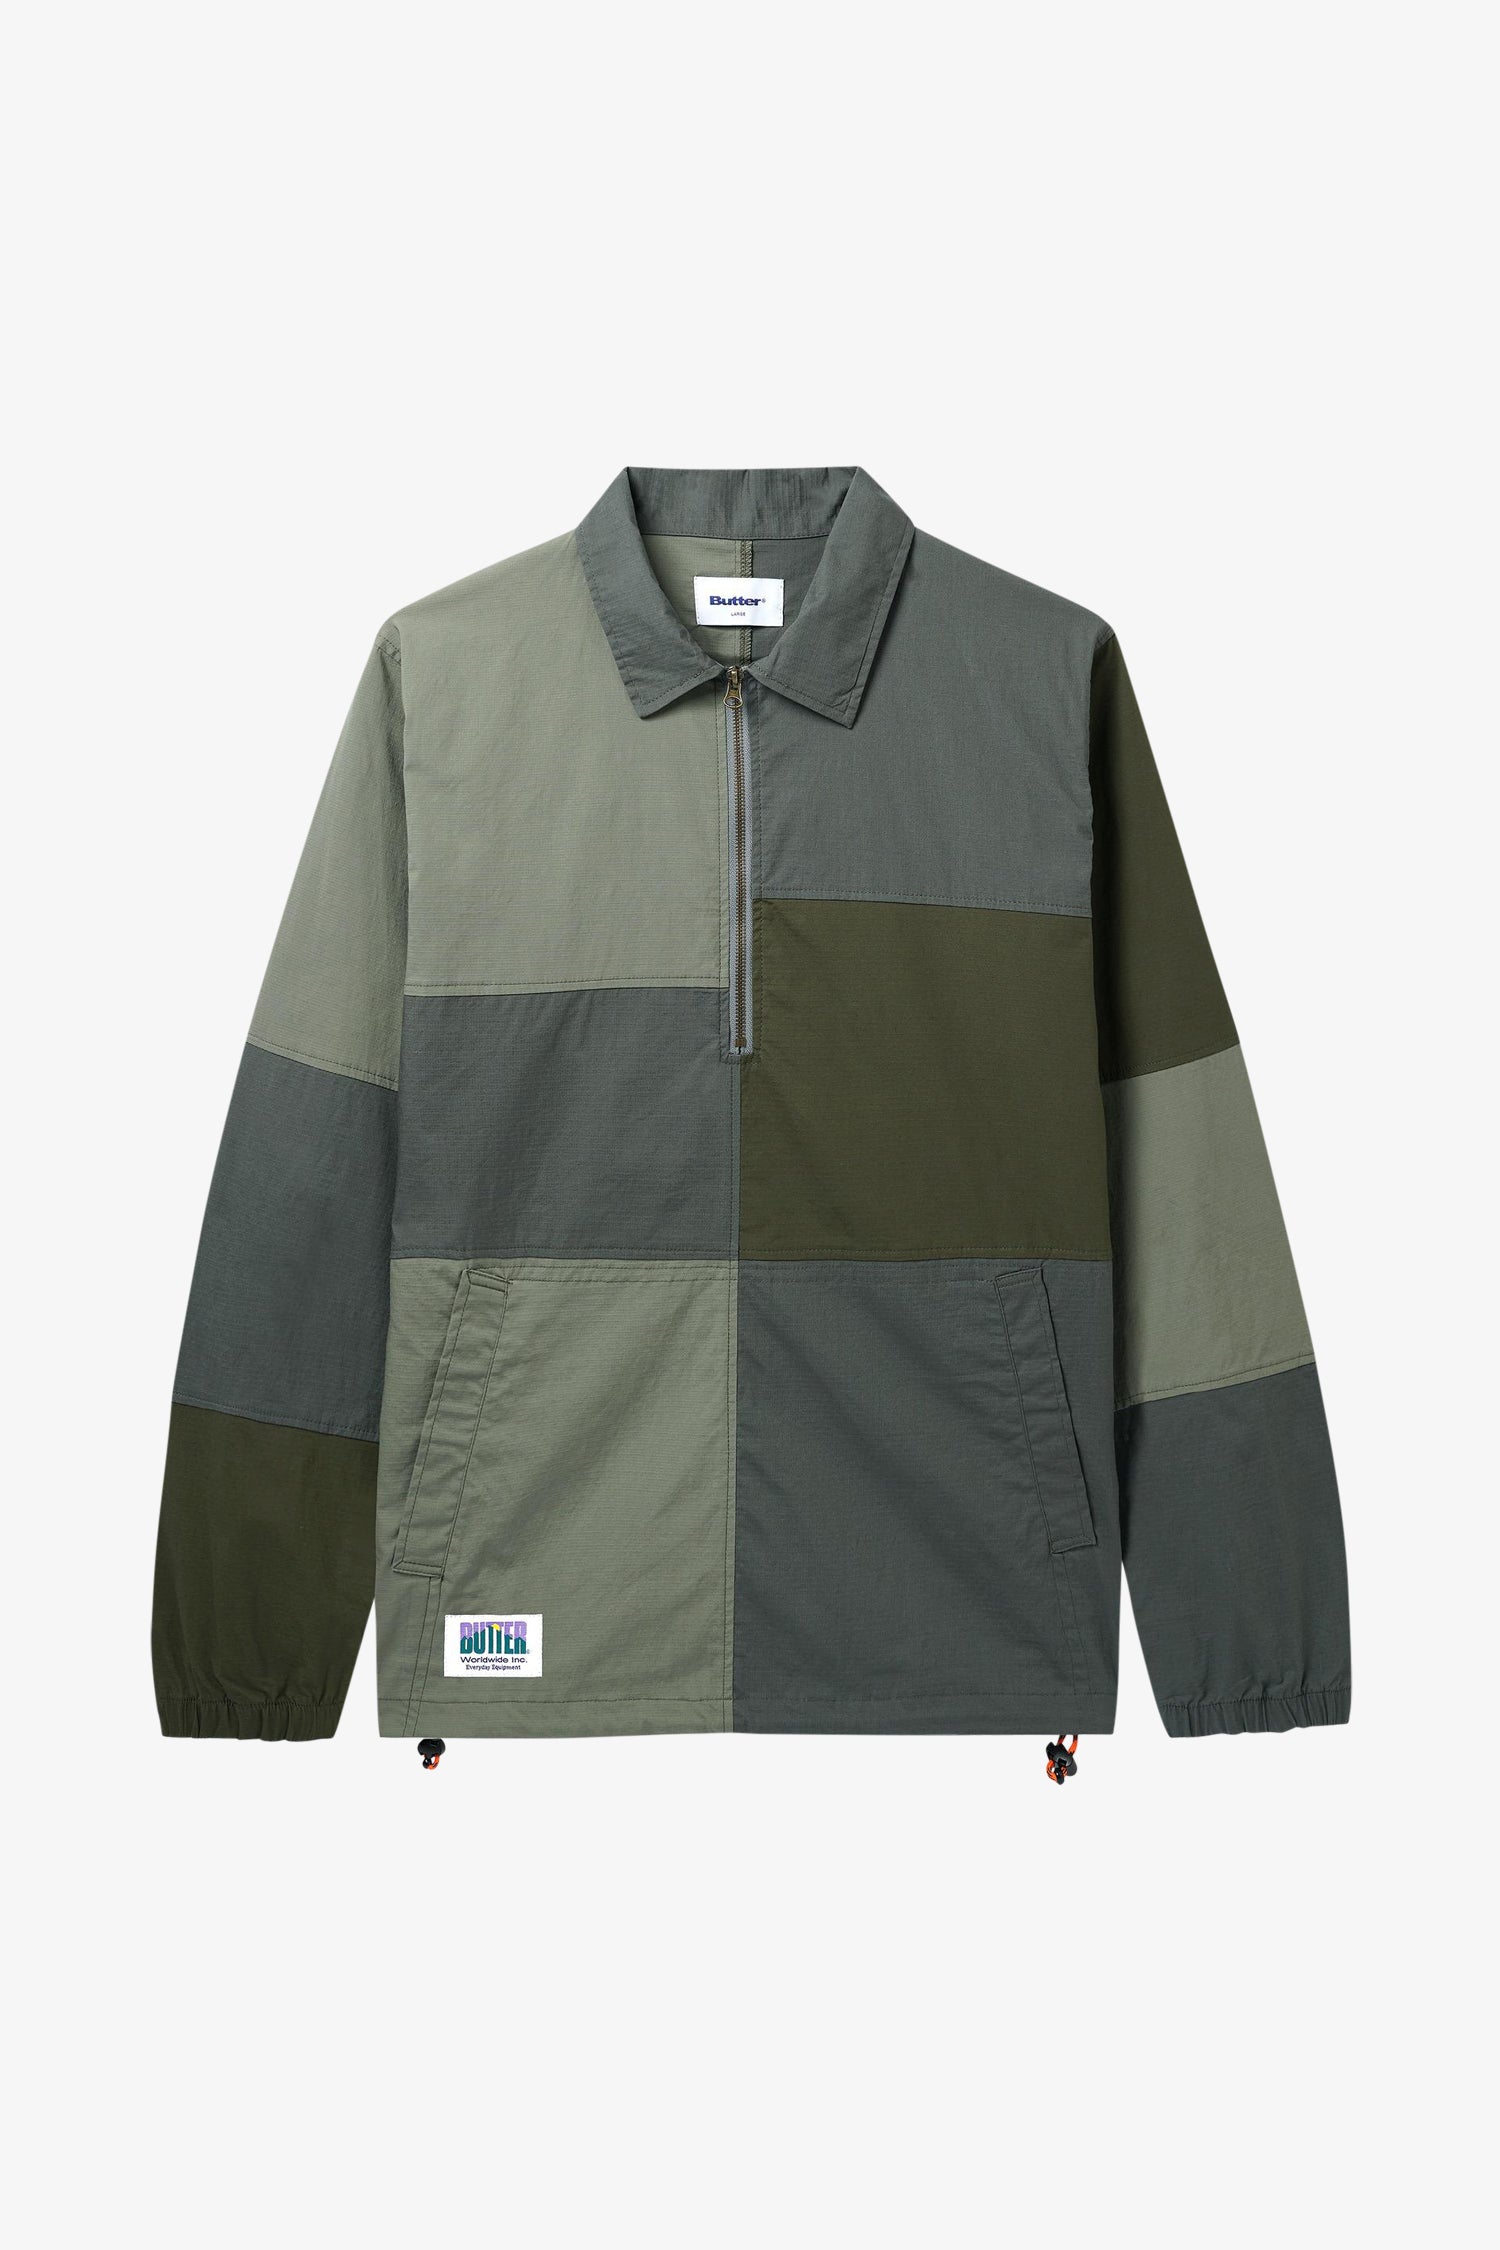 Selectshop FRAME - BUTTER GOODS Patchwork Jacket Outerwear Dubai